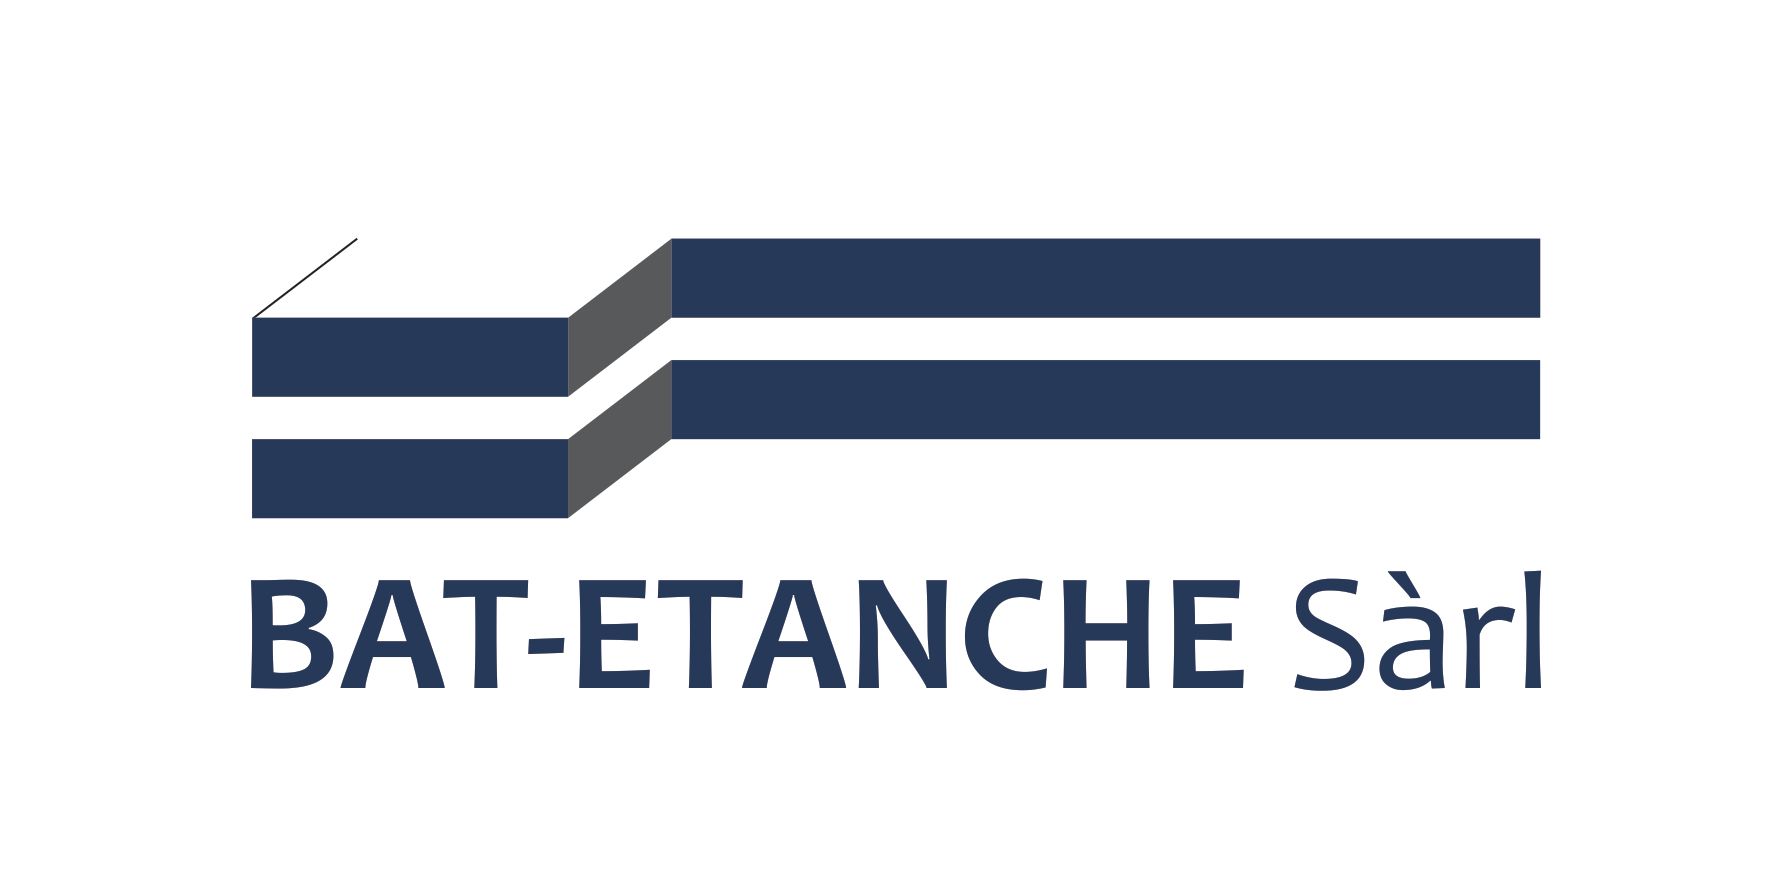 BAT-ETANCHE Sàrl logo